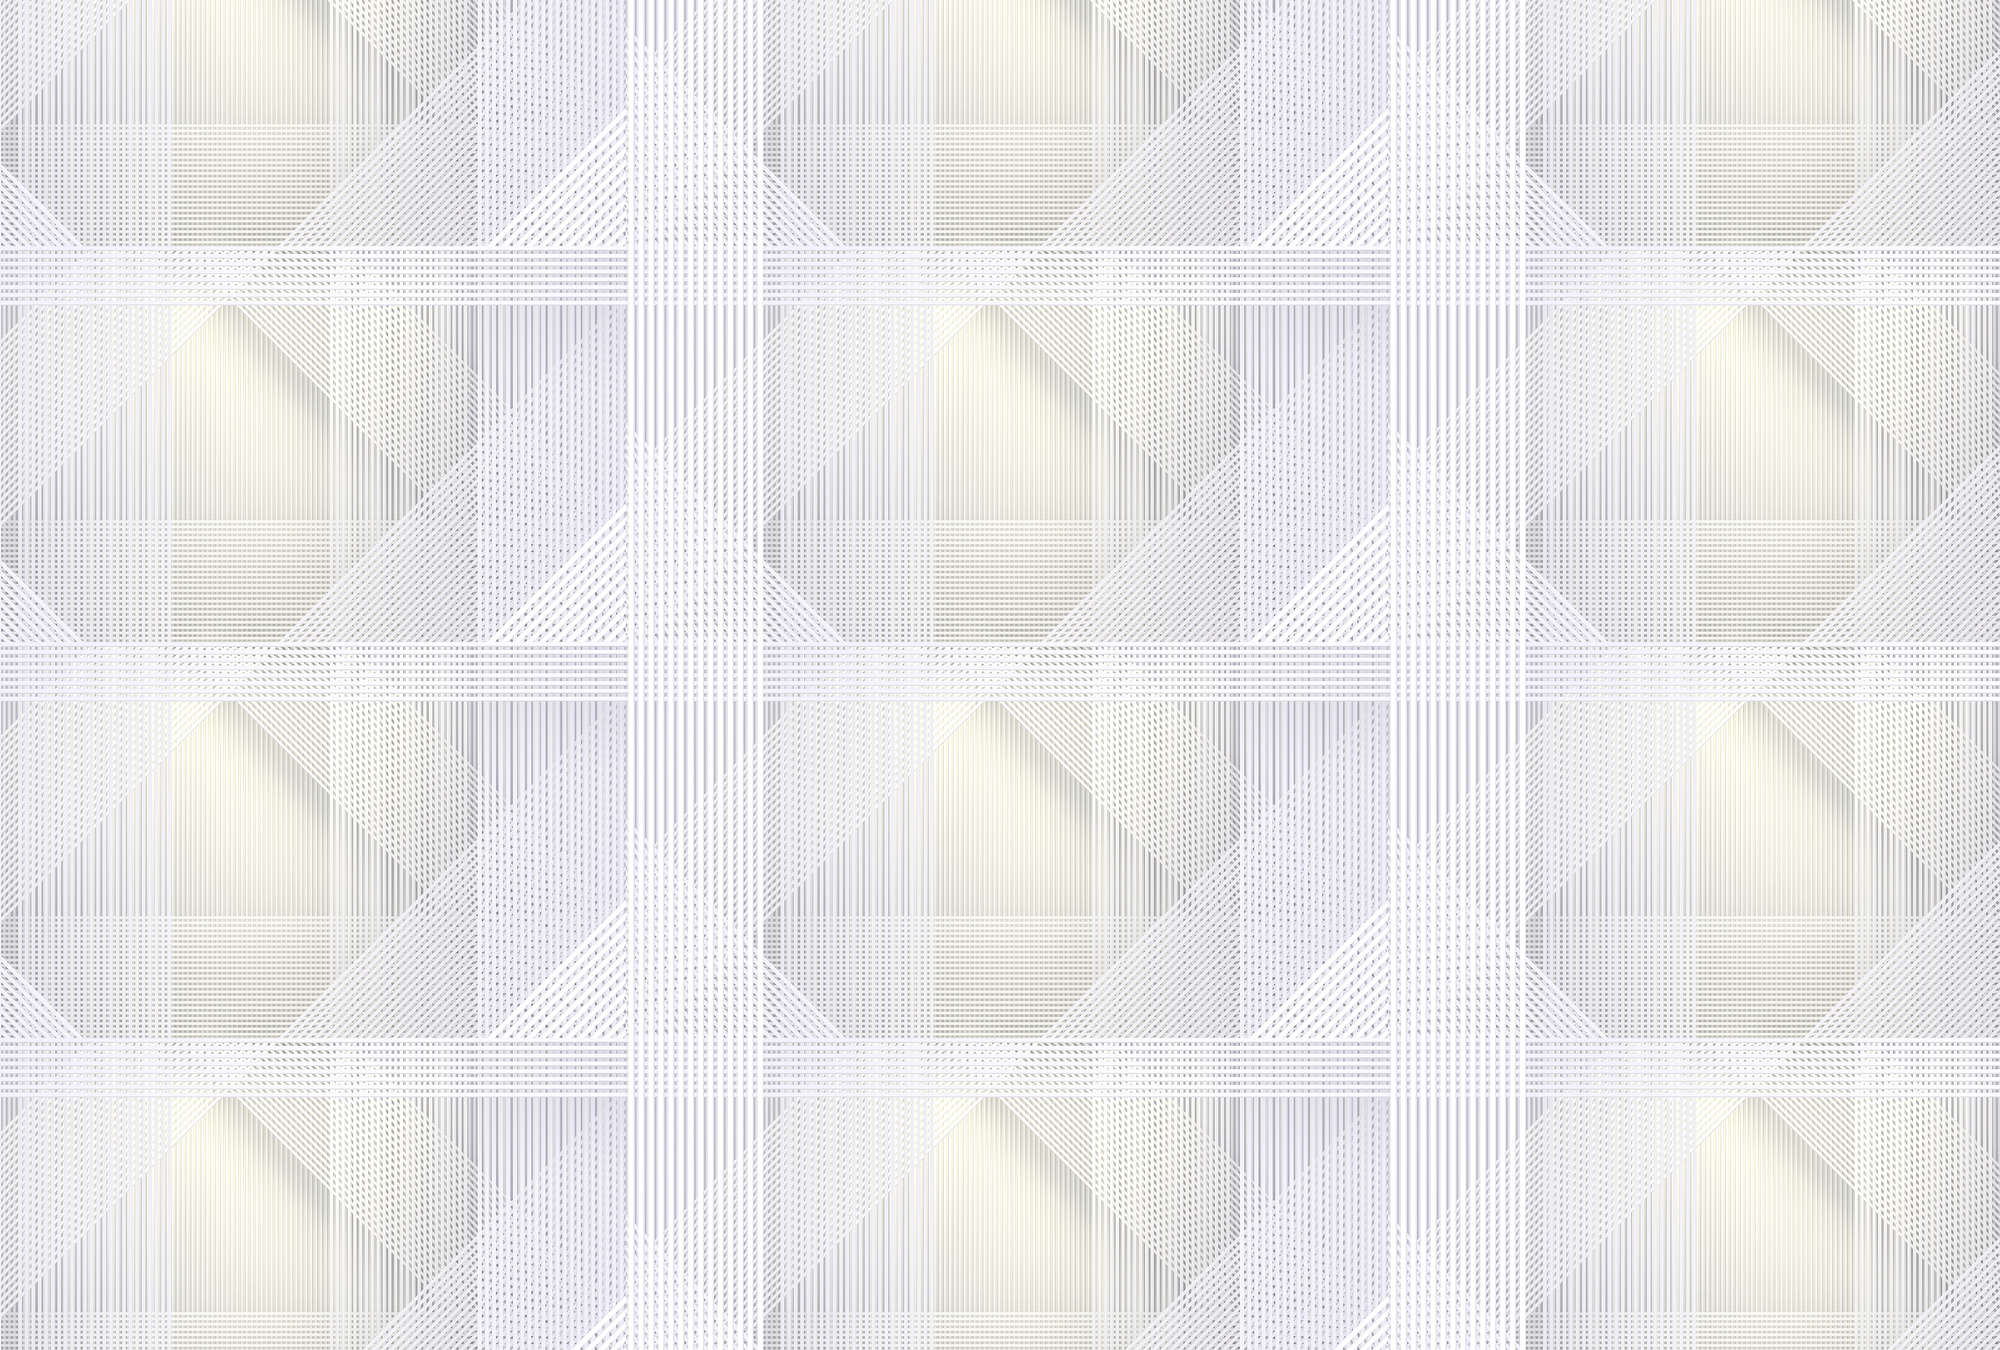             Strings 1 - Digital behang geometrisch streeppatroon - Geel, Grijs | Pearl glad non-woven
        